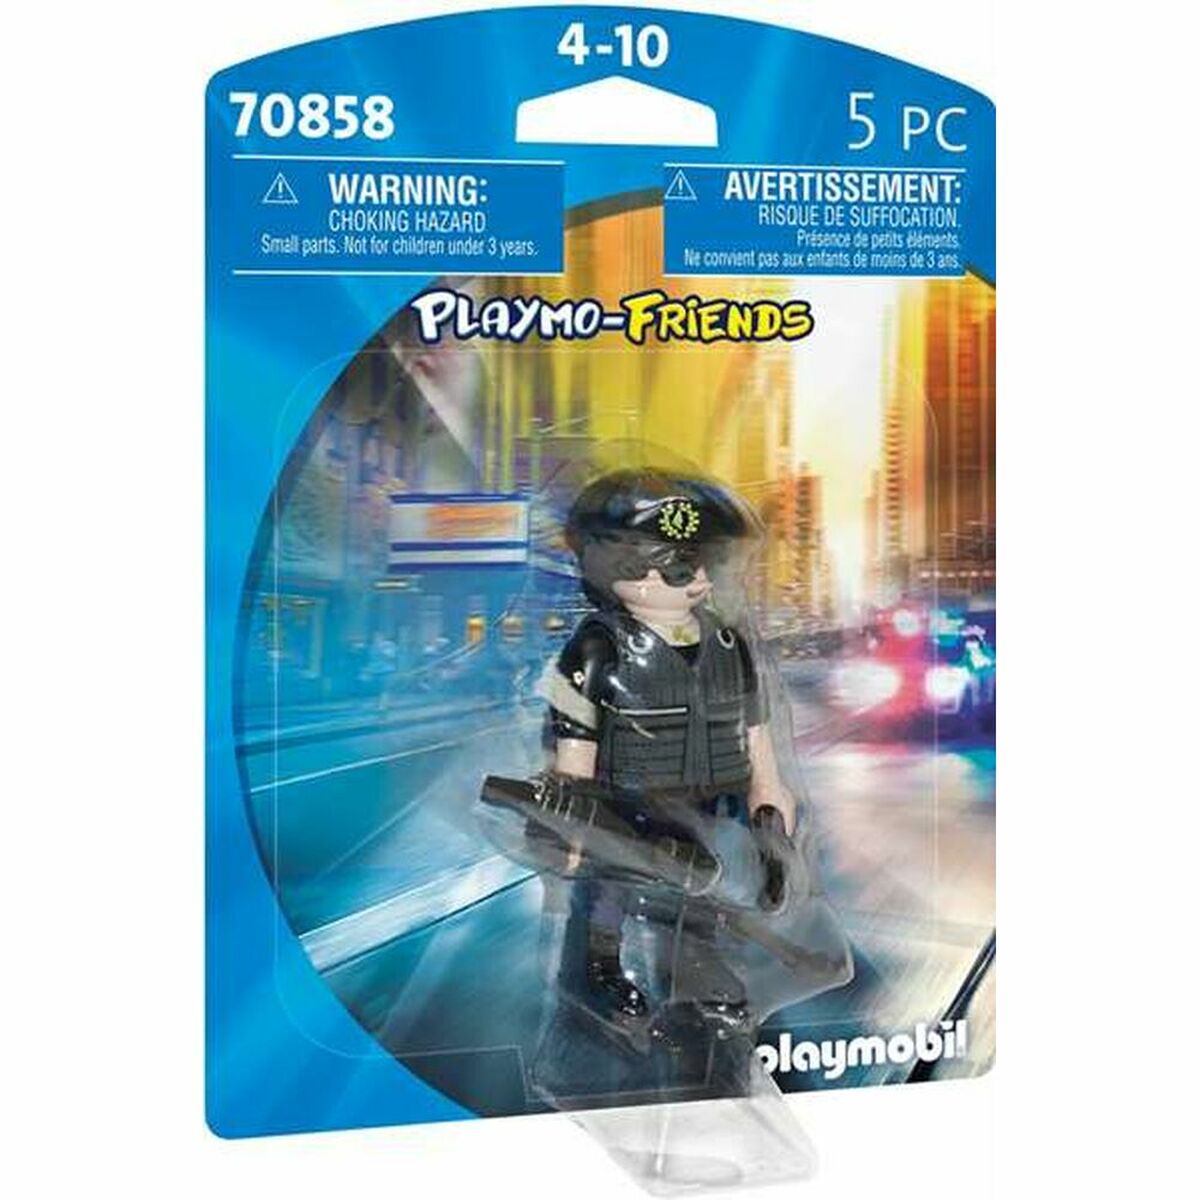 Figura îmbinată Playmobil Playmo-Friends 70858 Polițist (5 pcs)